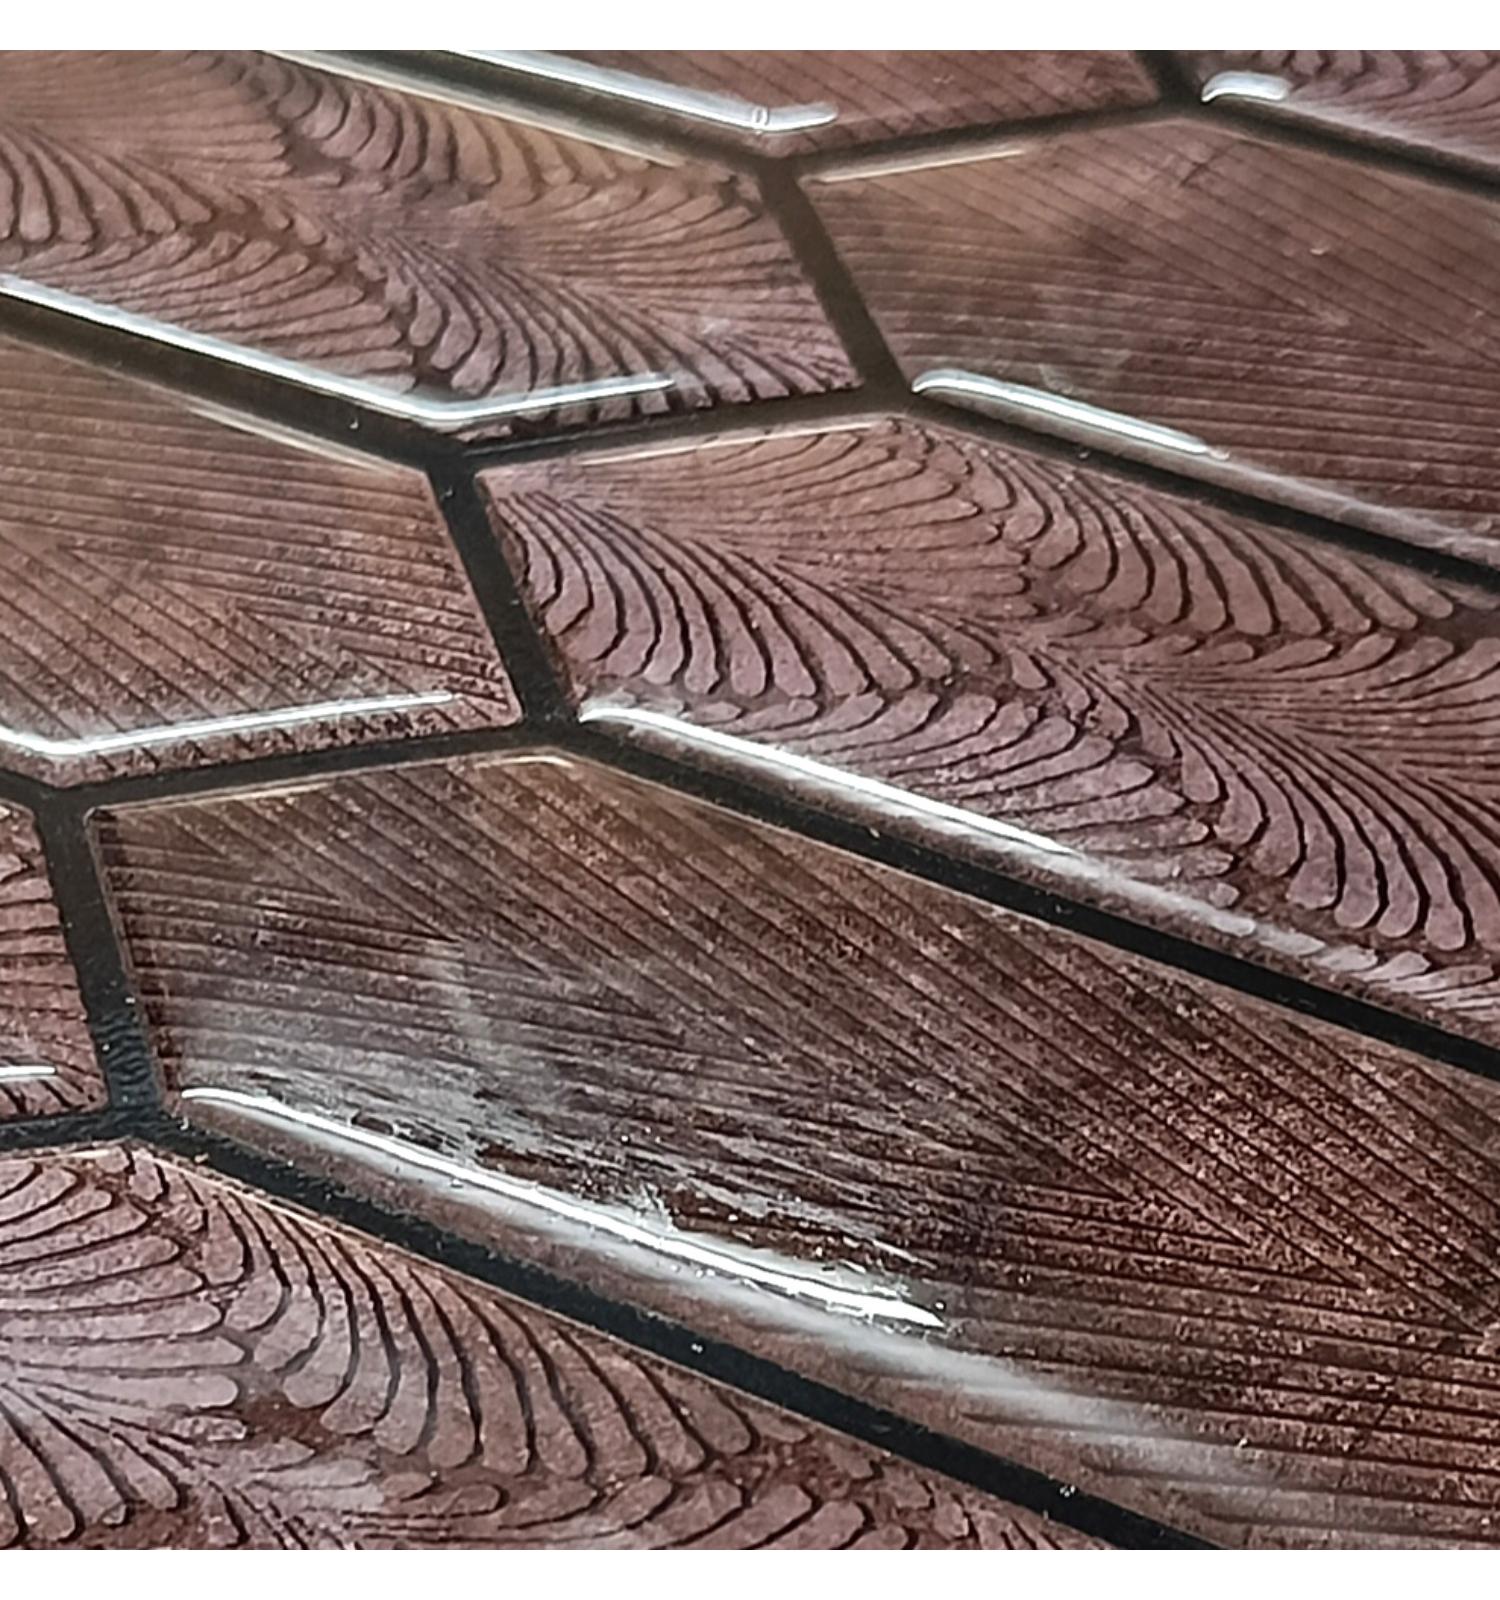 Copper Long Hexagon Peel and Stick Wall Tile | Kitchen Backsplash Tiles | Self Adhesive Tiles For Home Decor